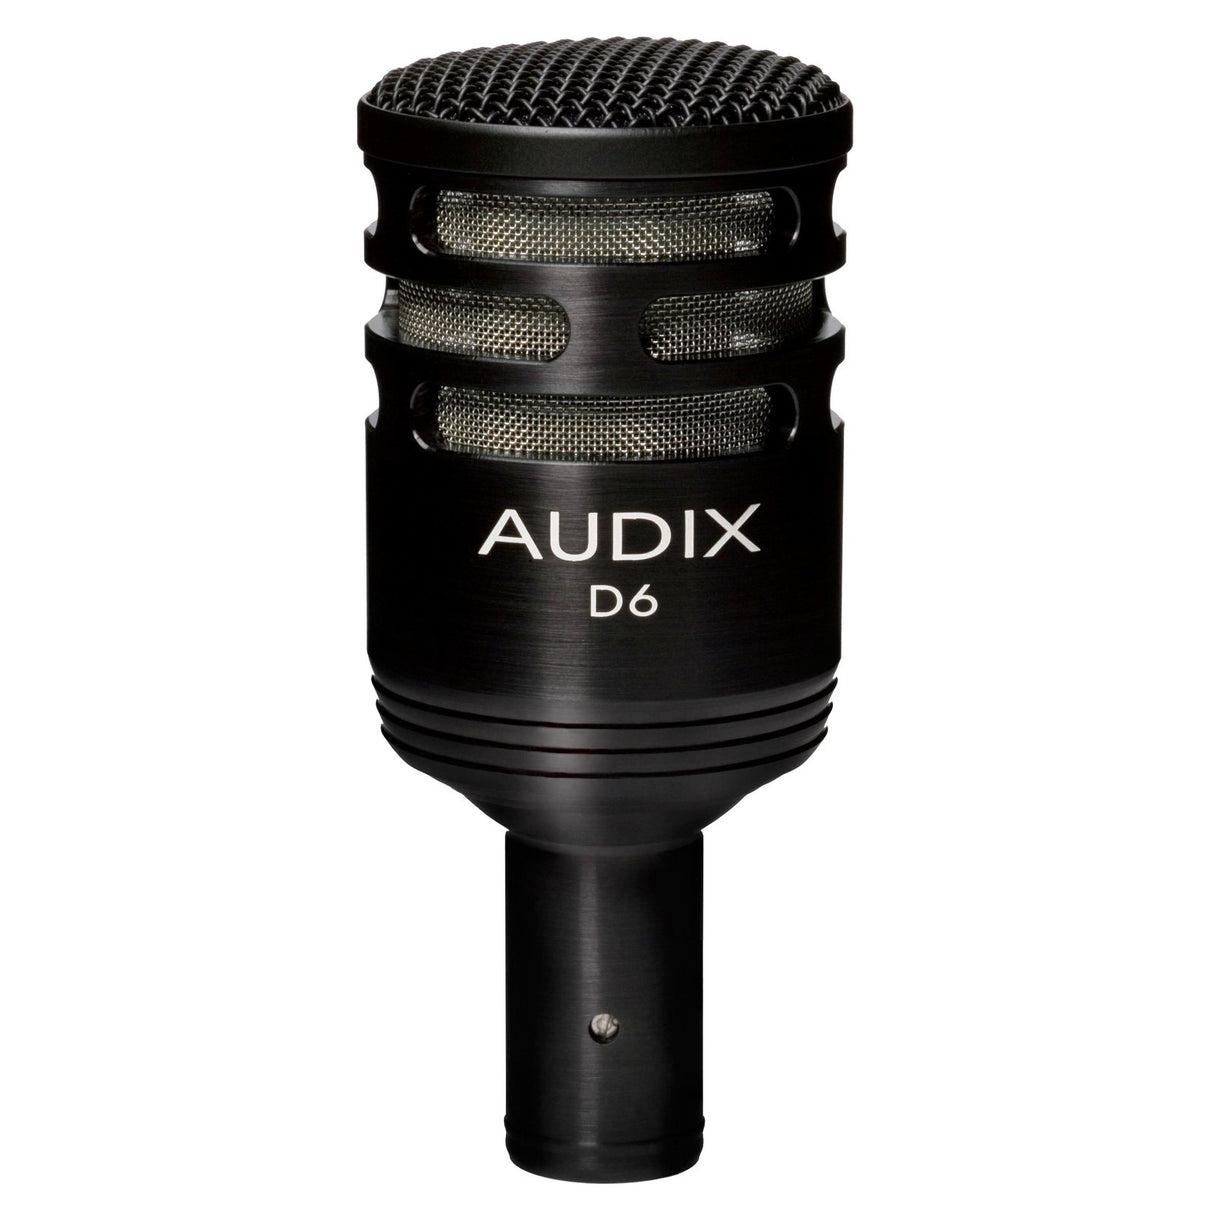 Audix D6 Dynamic Bass Drum Microphone